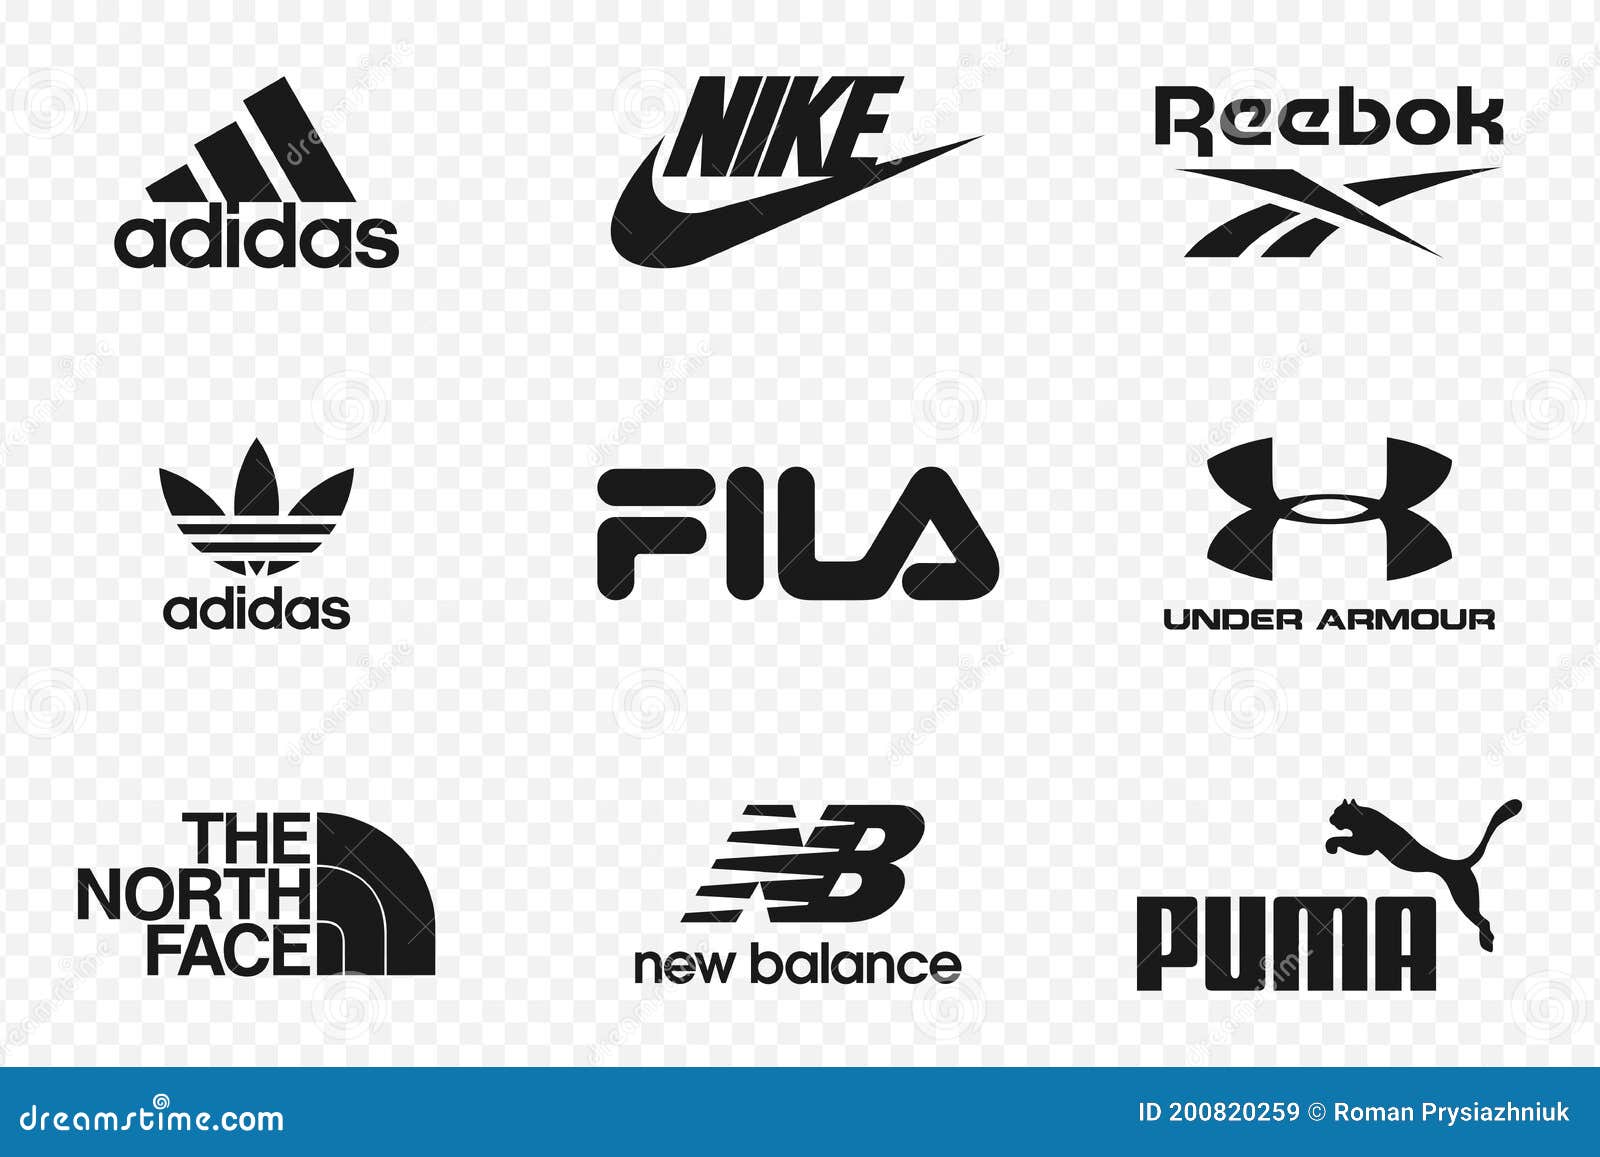 adidas clothing brands